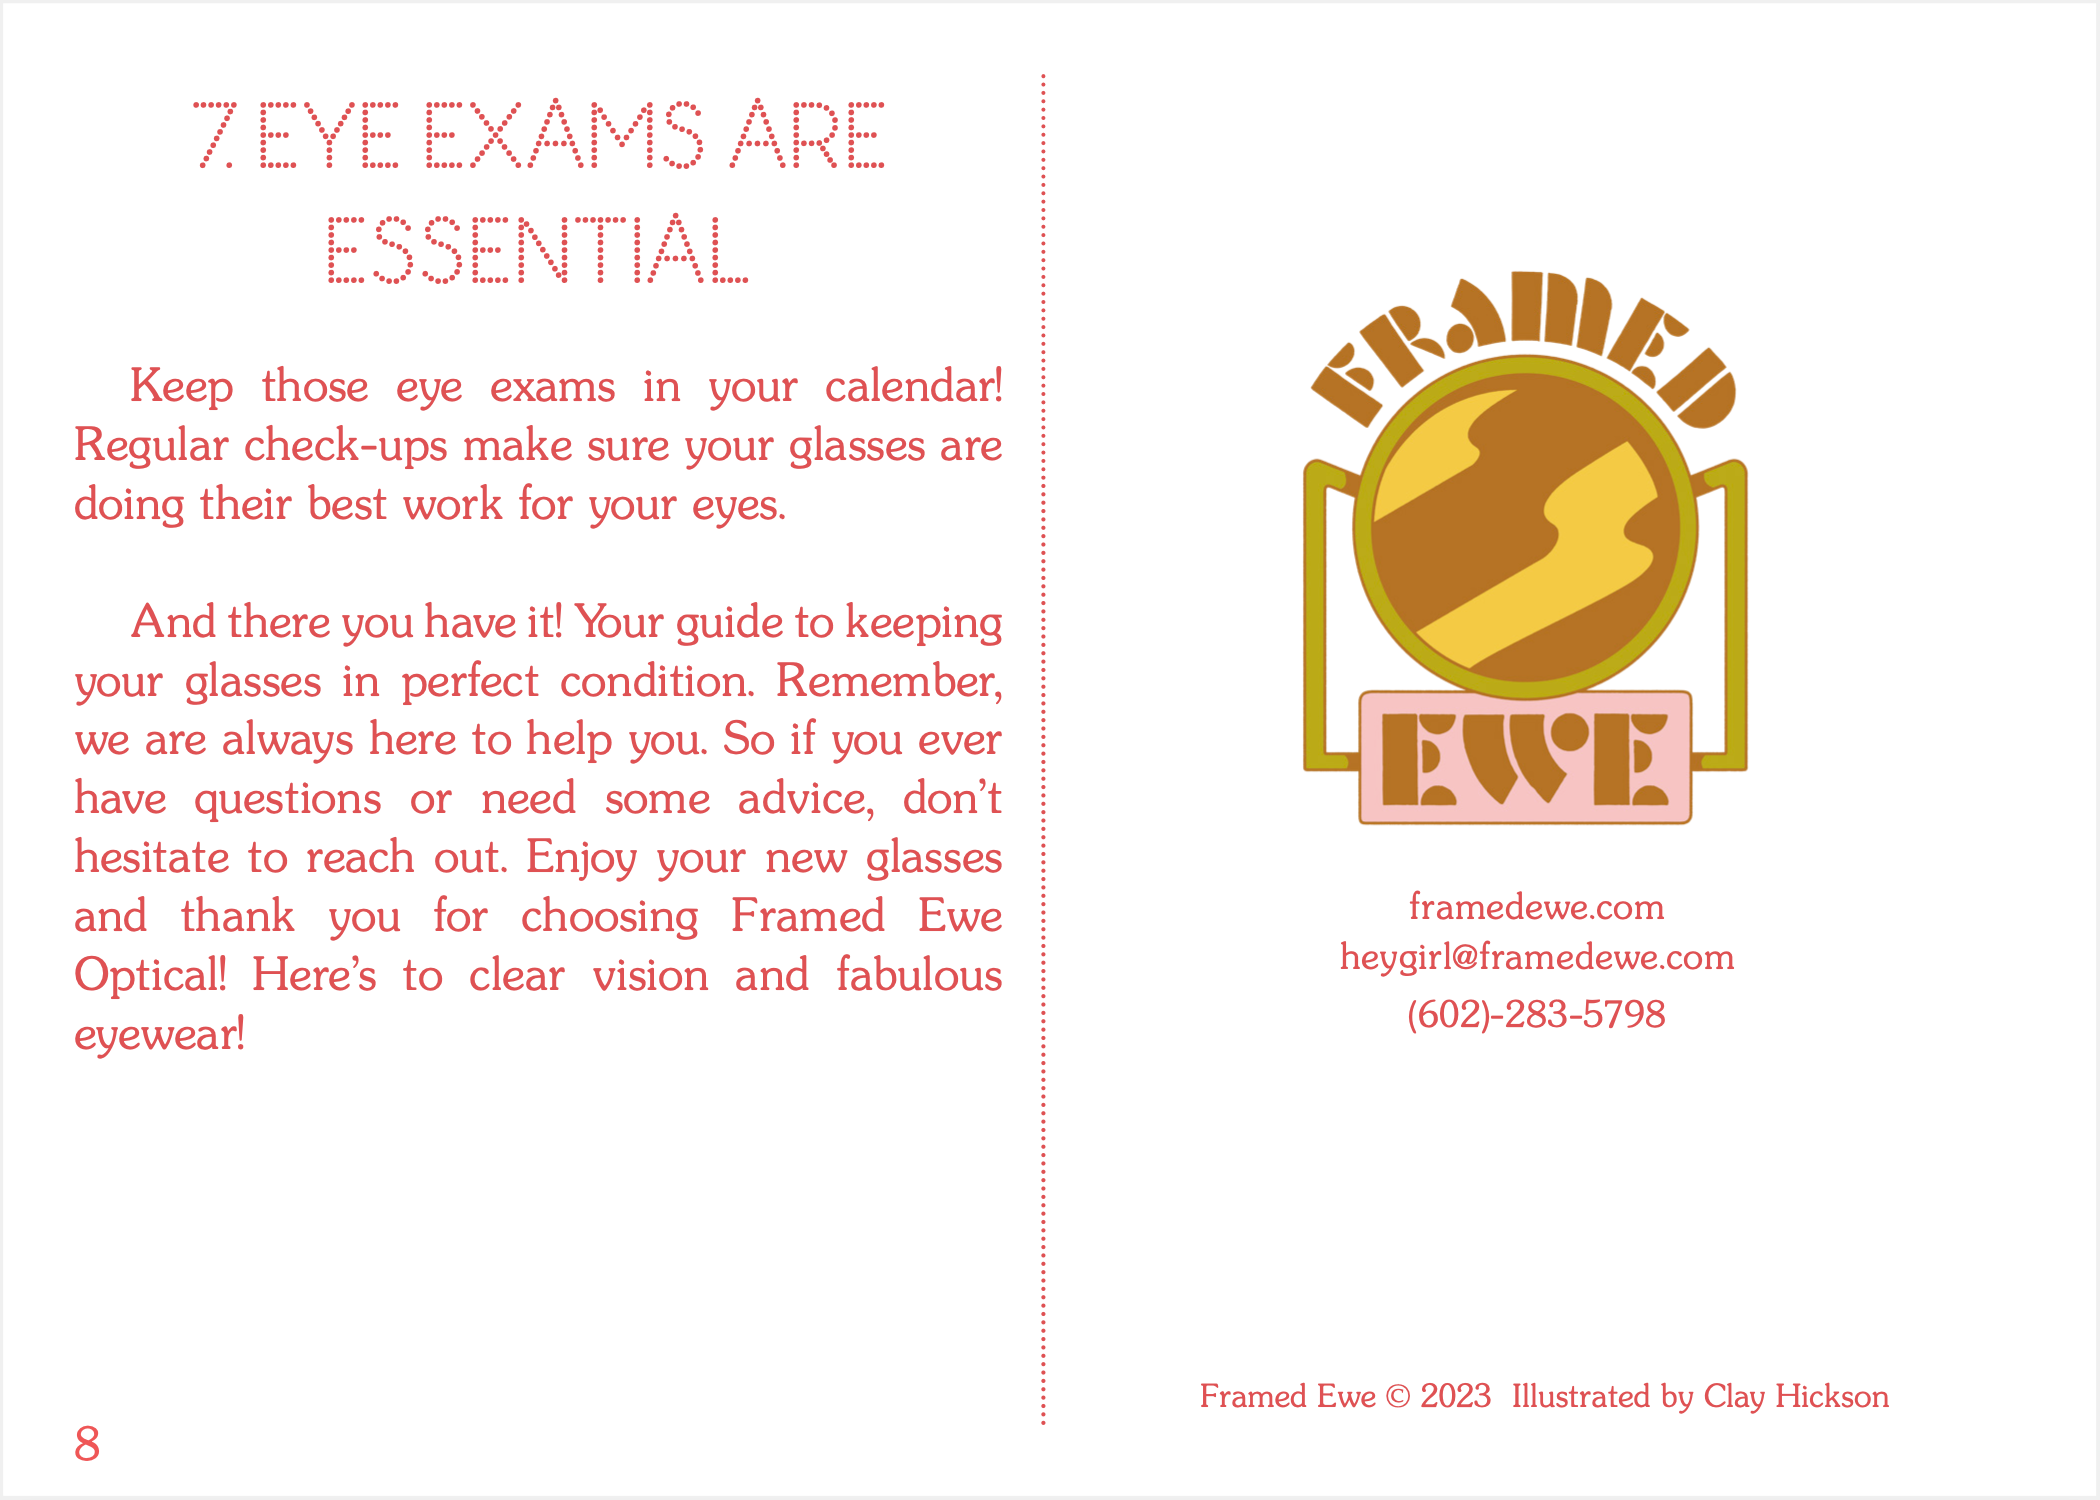 Framed_Ewe_Care-Guide_9.png